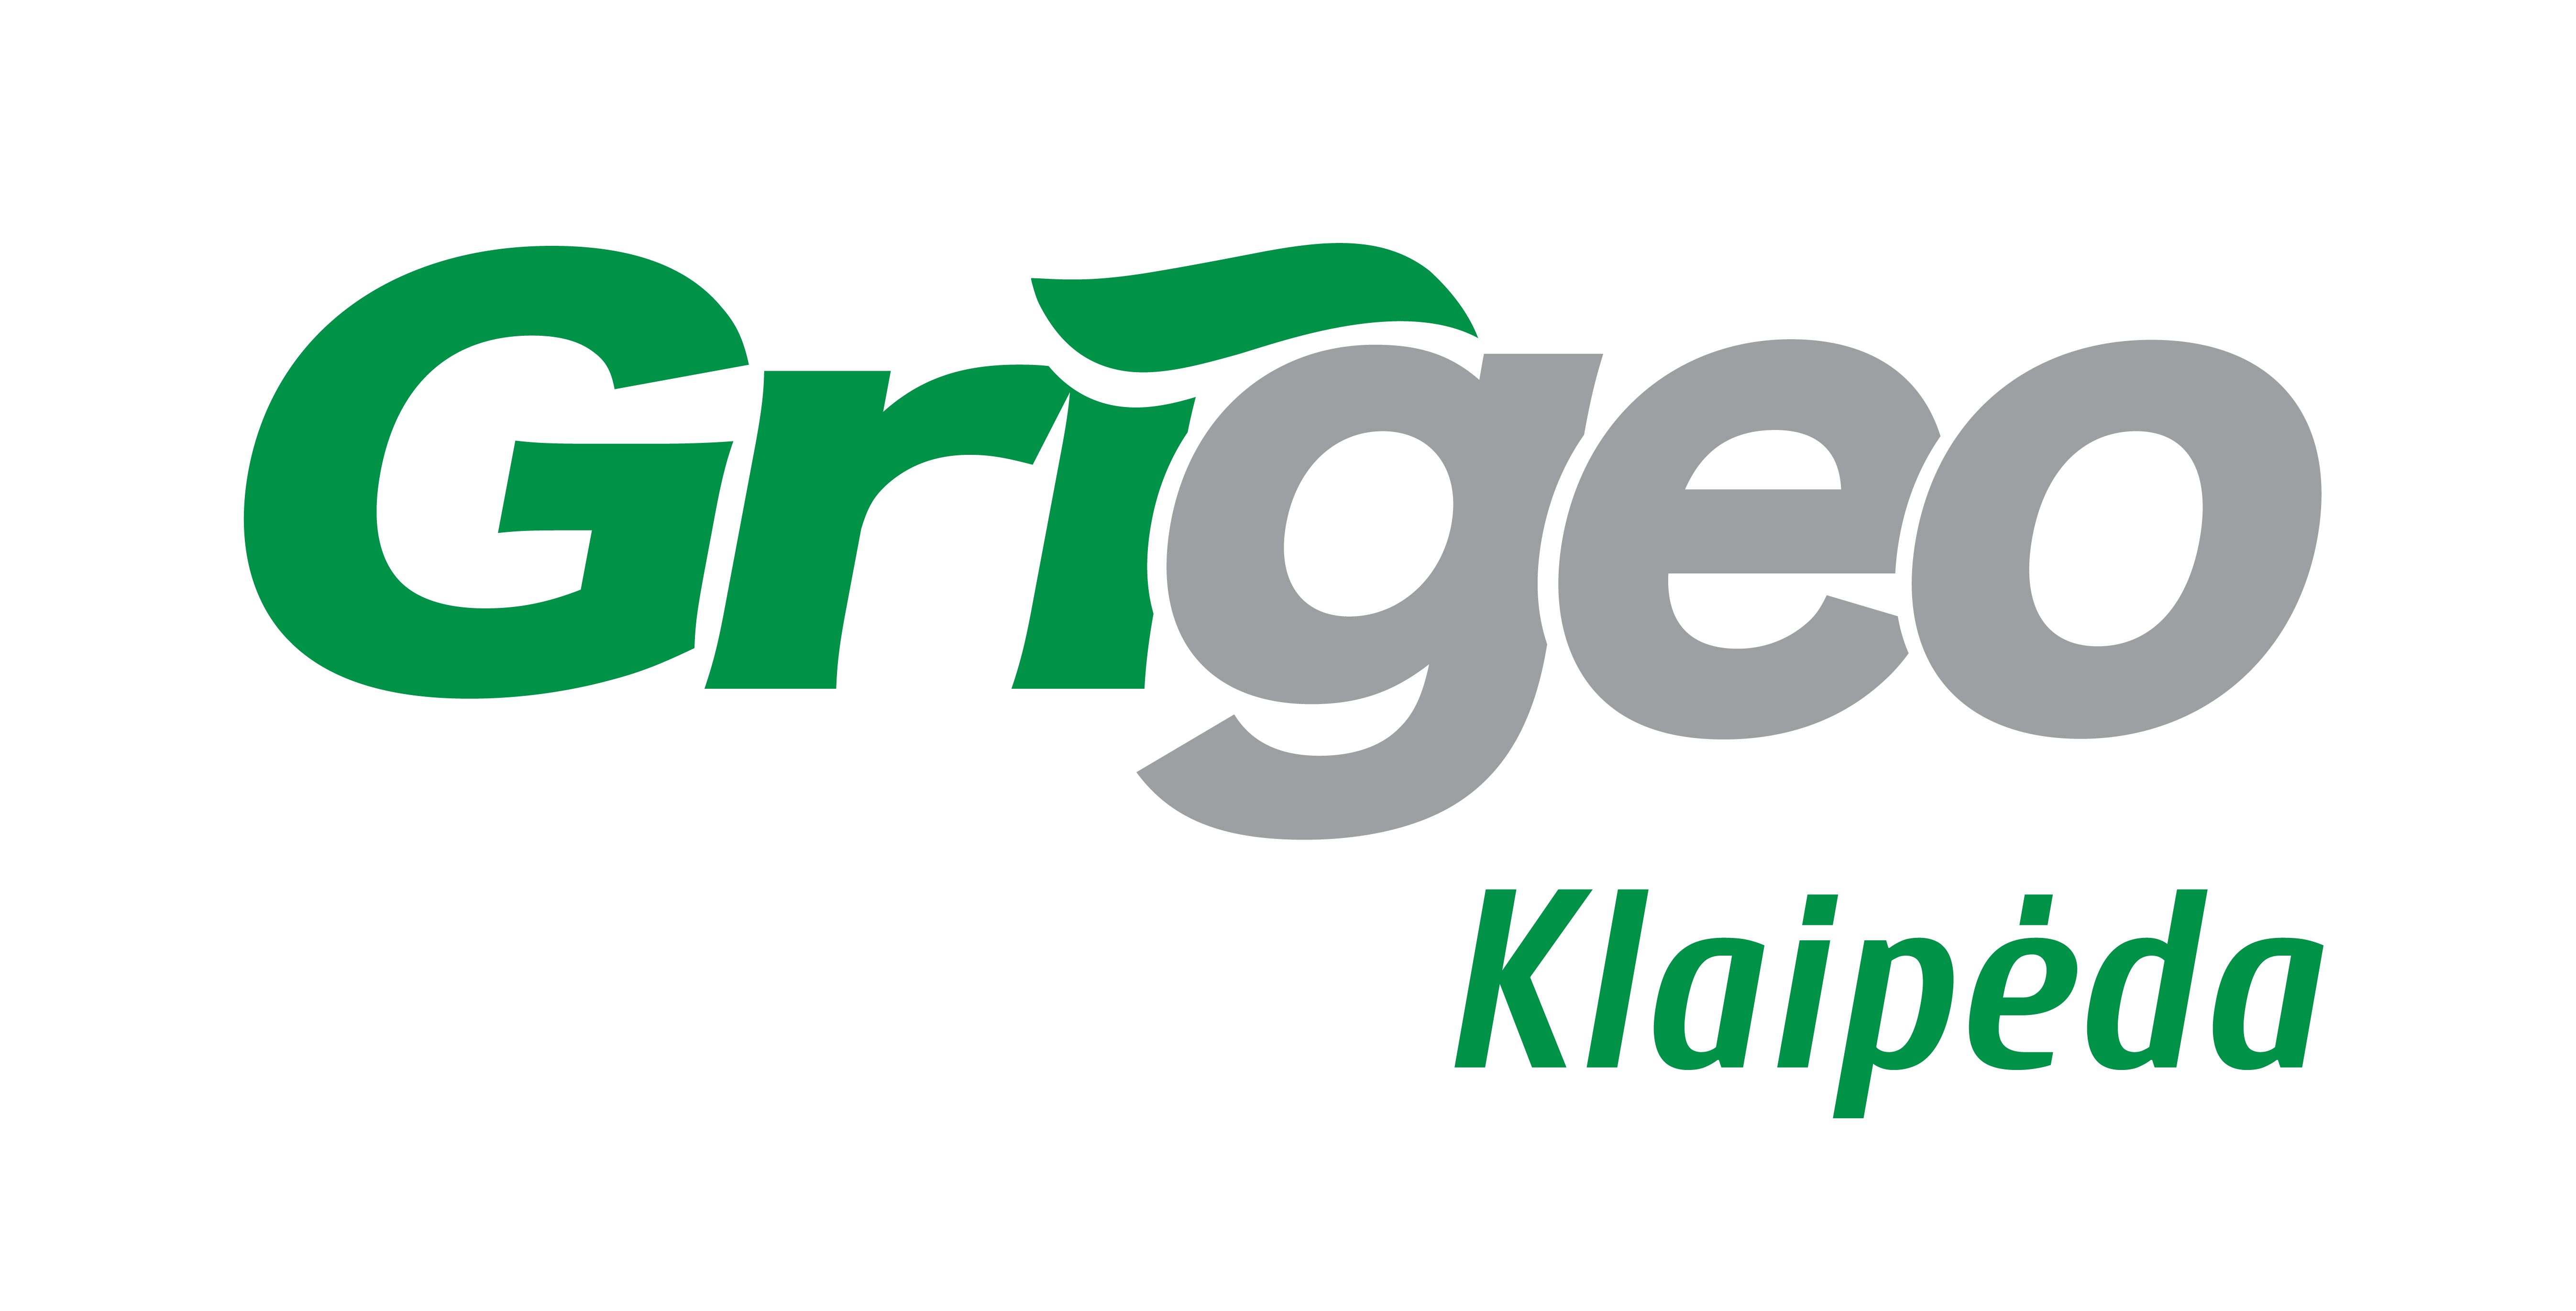 "Grigeo Klaipėda" ships cardboard to Ukraine via Poland by rail